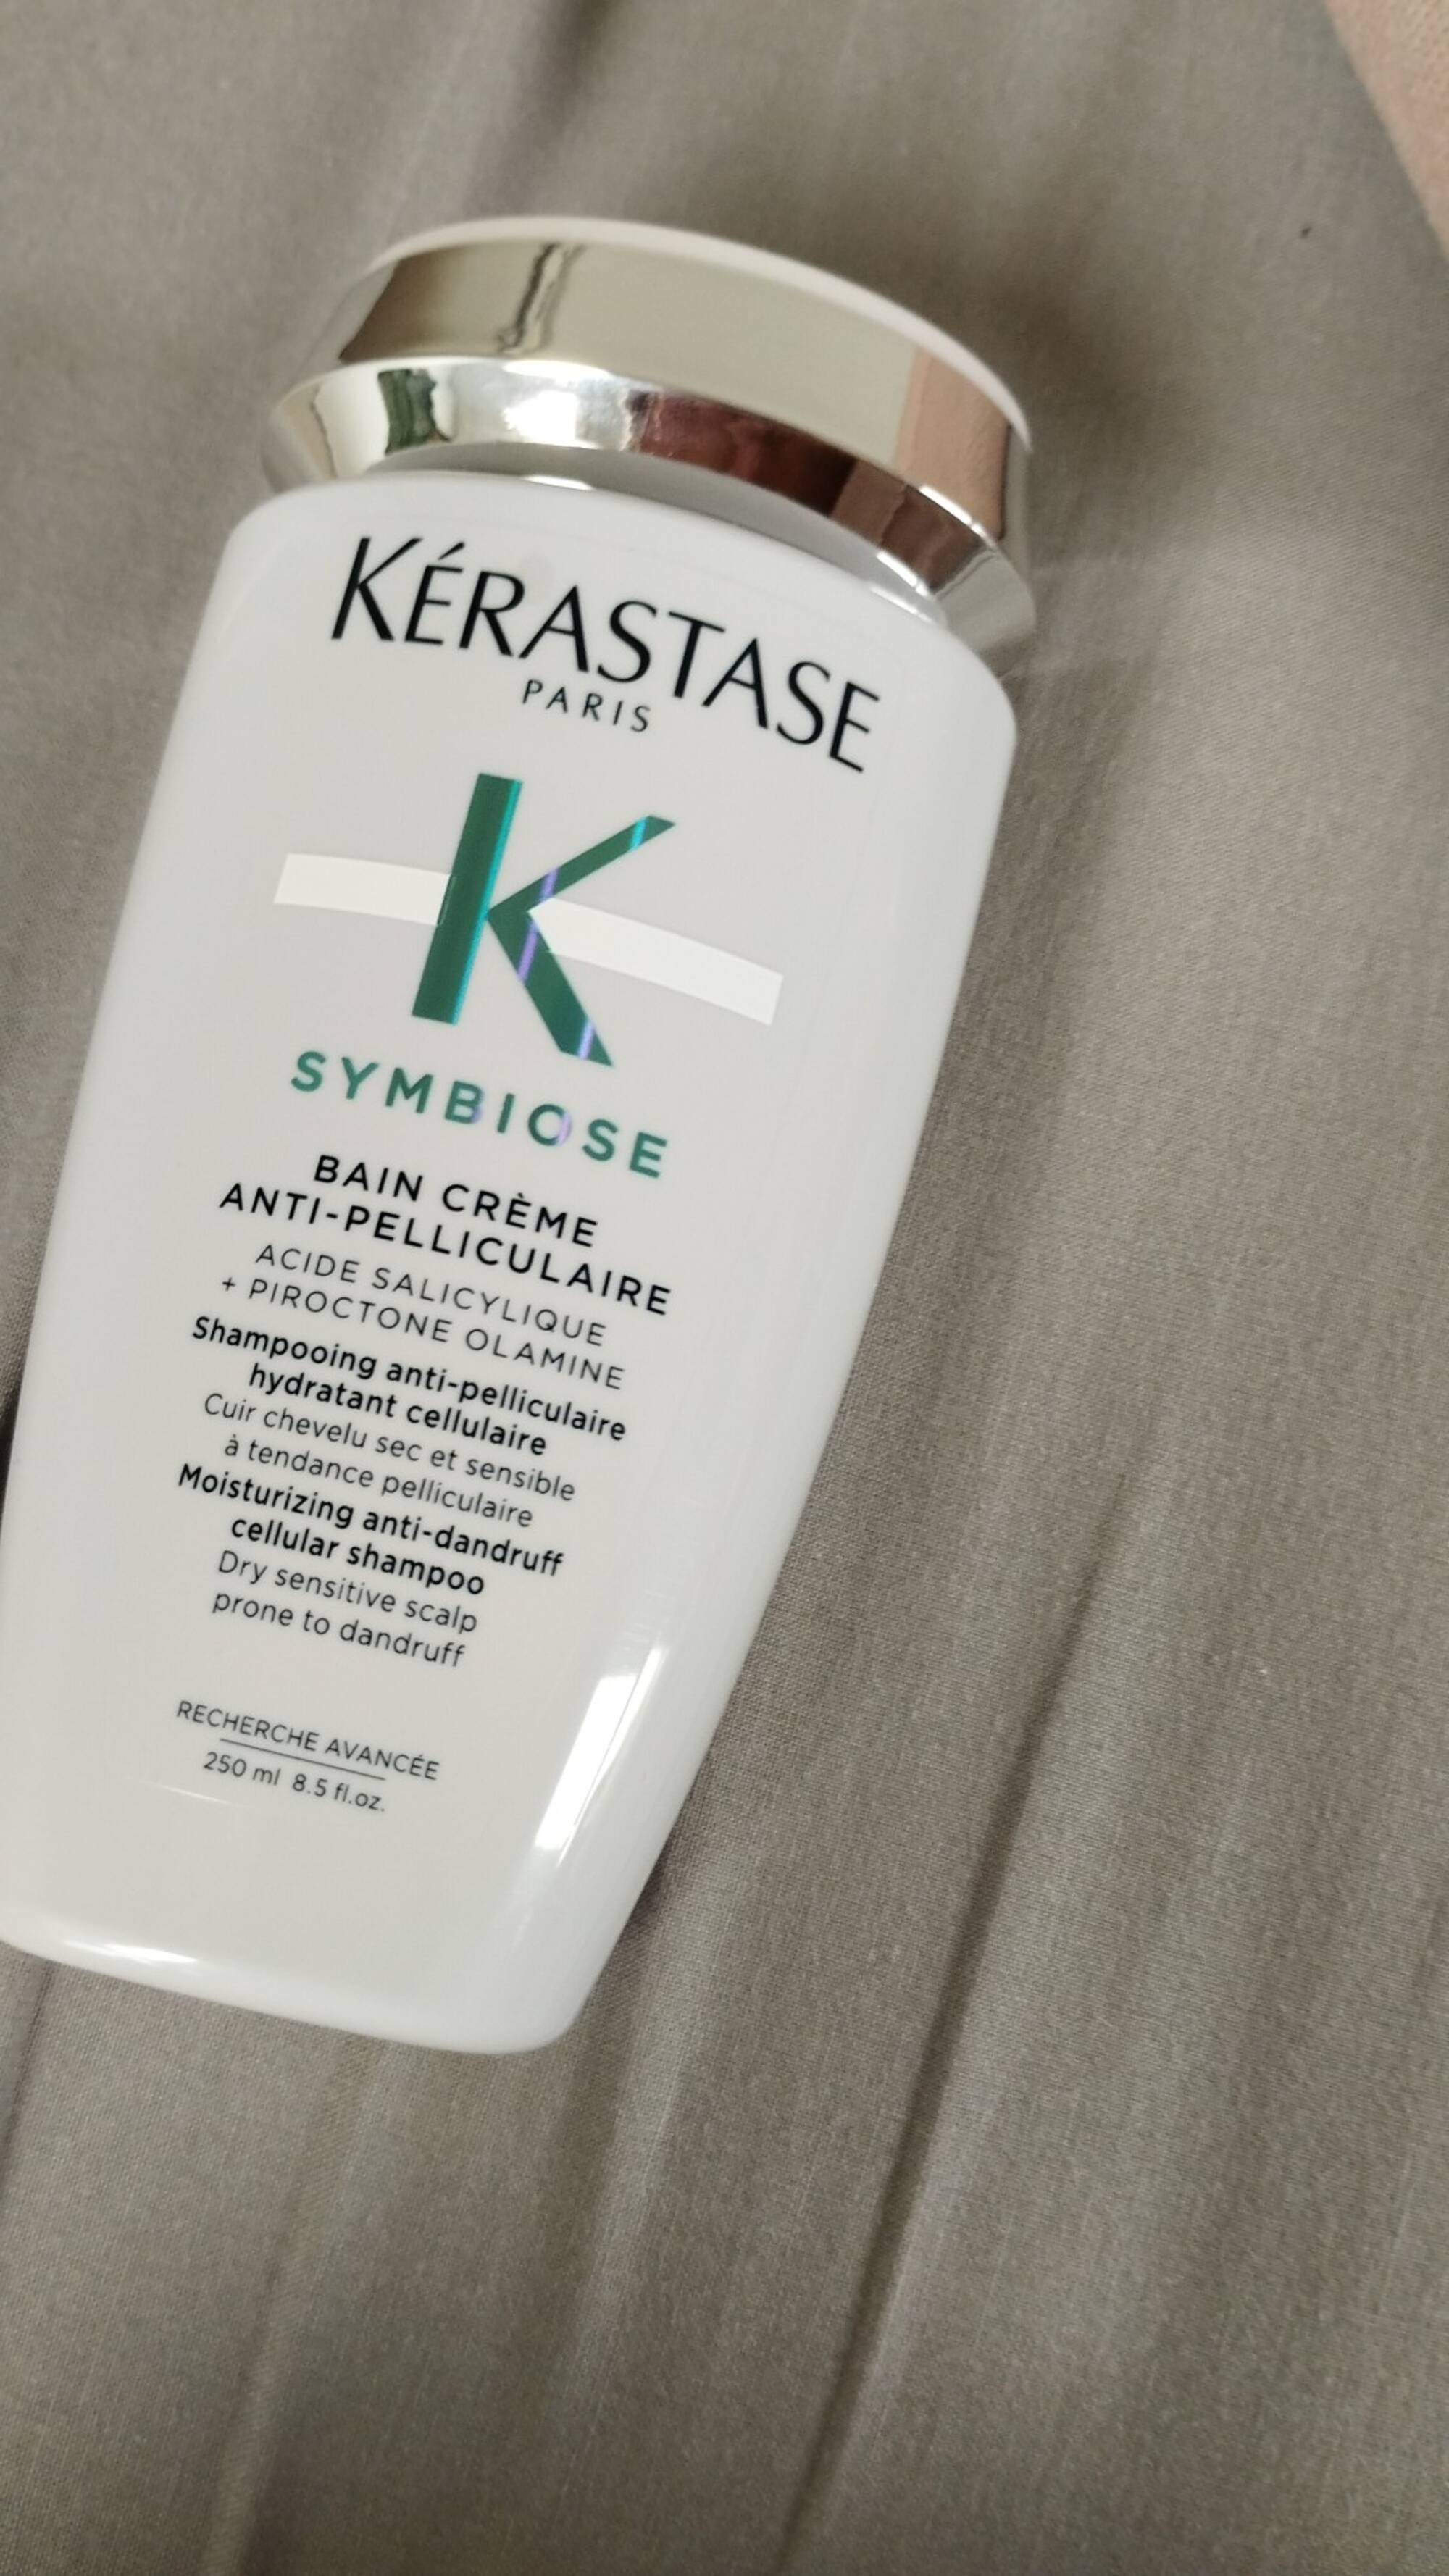 KÉRASTASE - Symbiose - Bain crème anti-pelliculaire shampooing